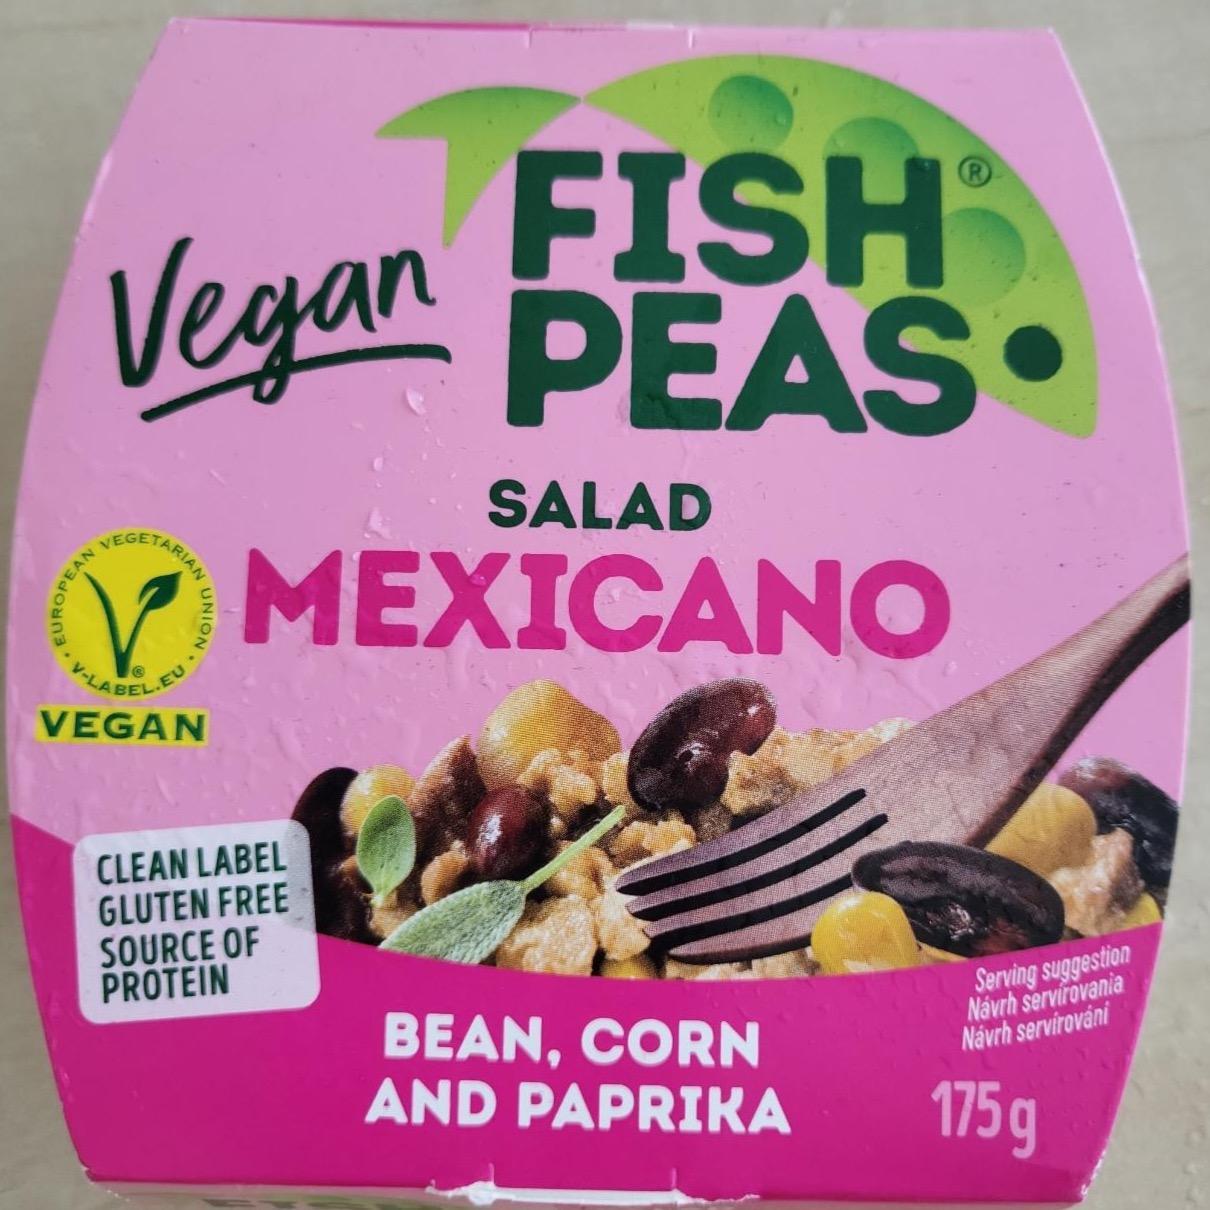 Képek - Salad mexicano Vegan fish peas